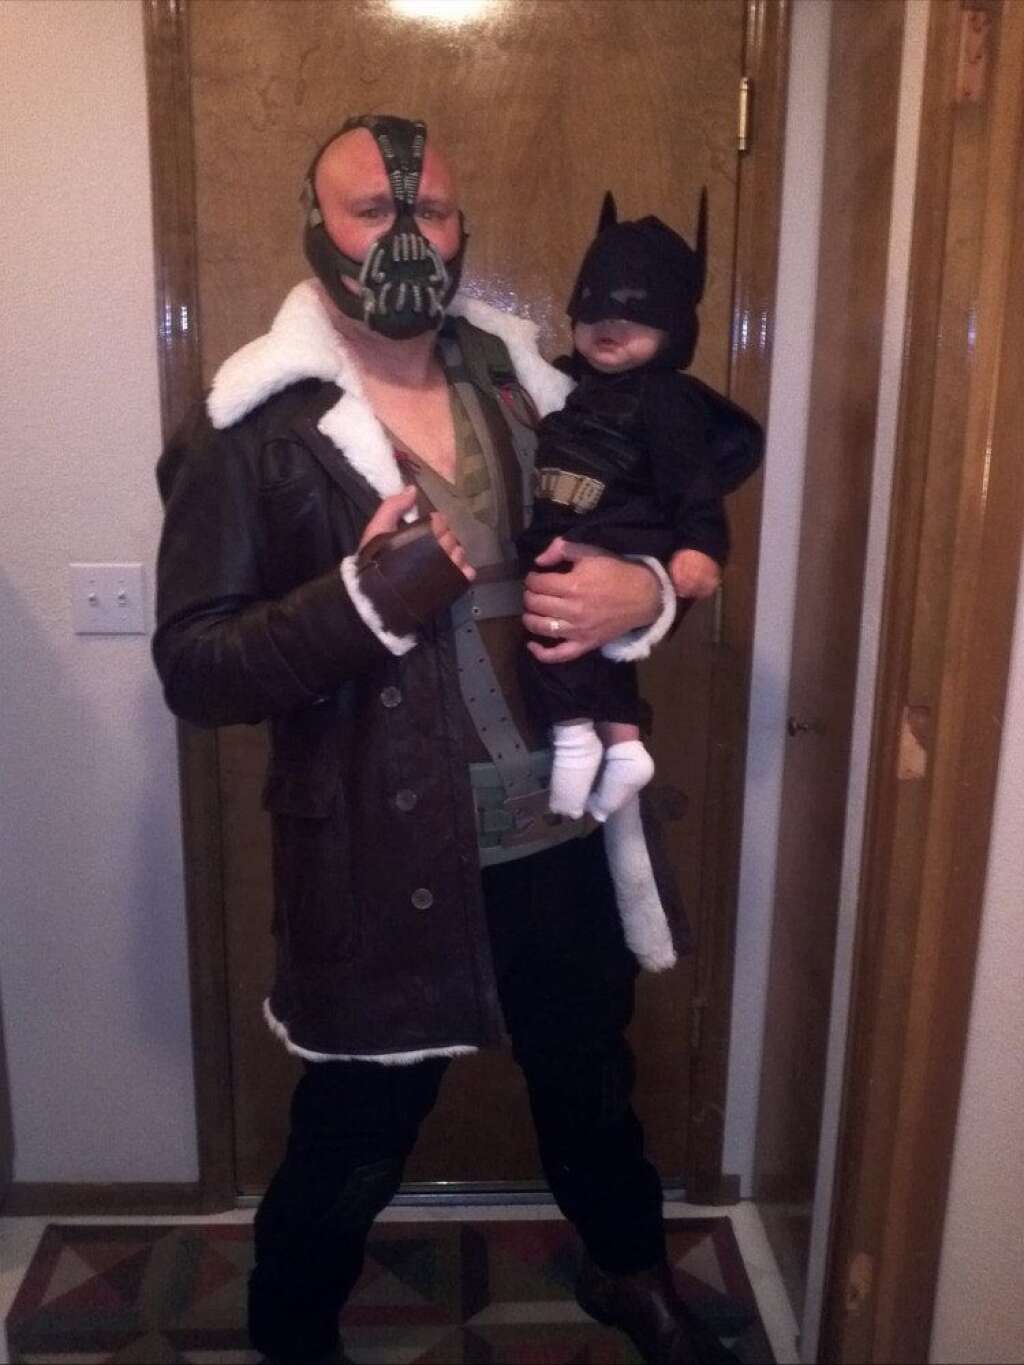 Bayne et bébé Batman - <a href="http://imgur.com/GZ5mK">SOURCE</a>